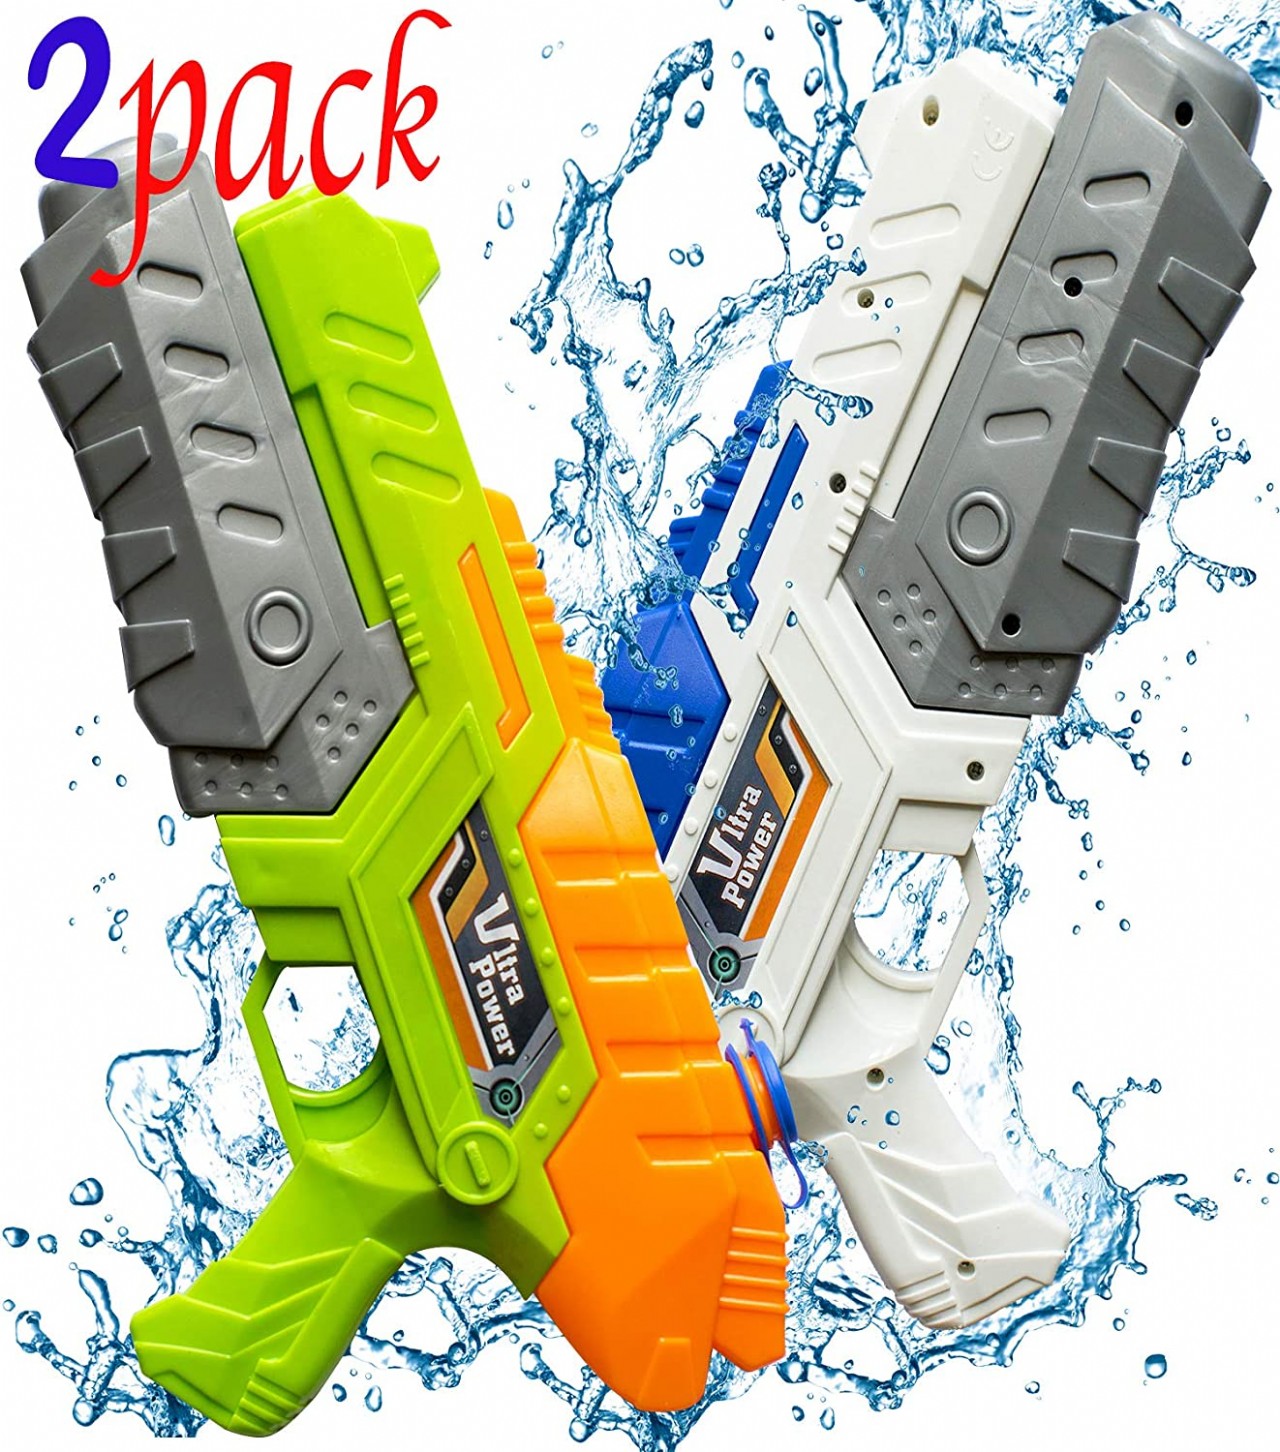 Water Gun Blaster - Super Soaker Water Squirt Guns for Kids Adults Shooters Watergun Long Range Outd